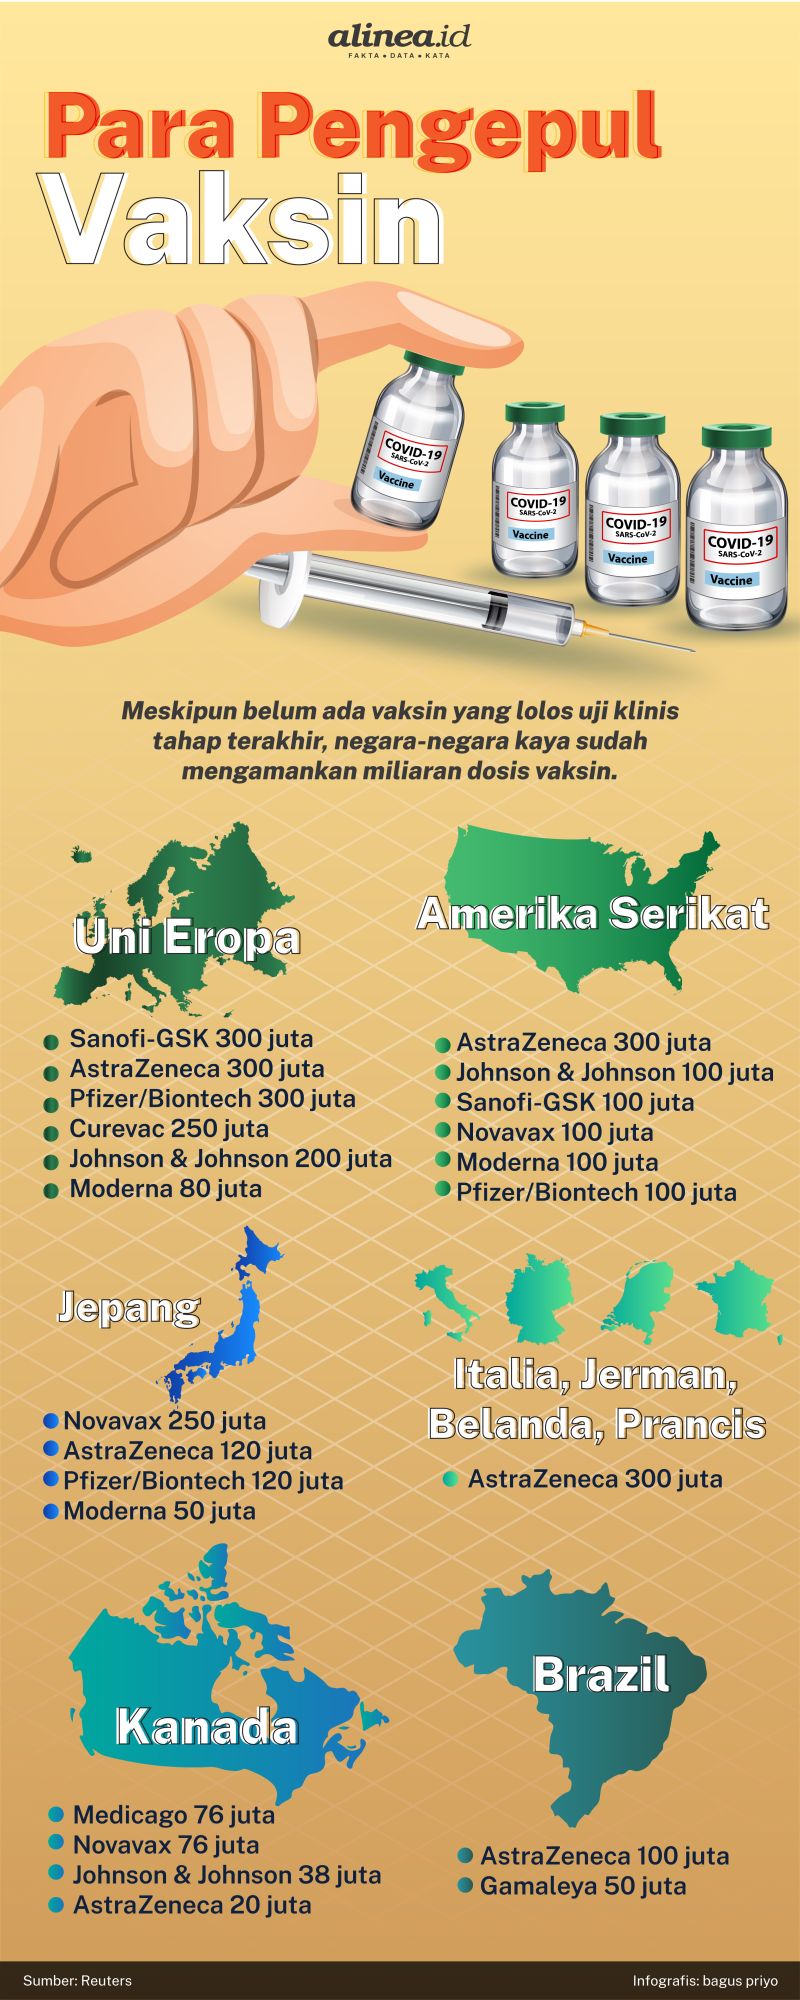 Infografis Alinea.id/Bagus Priyo